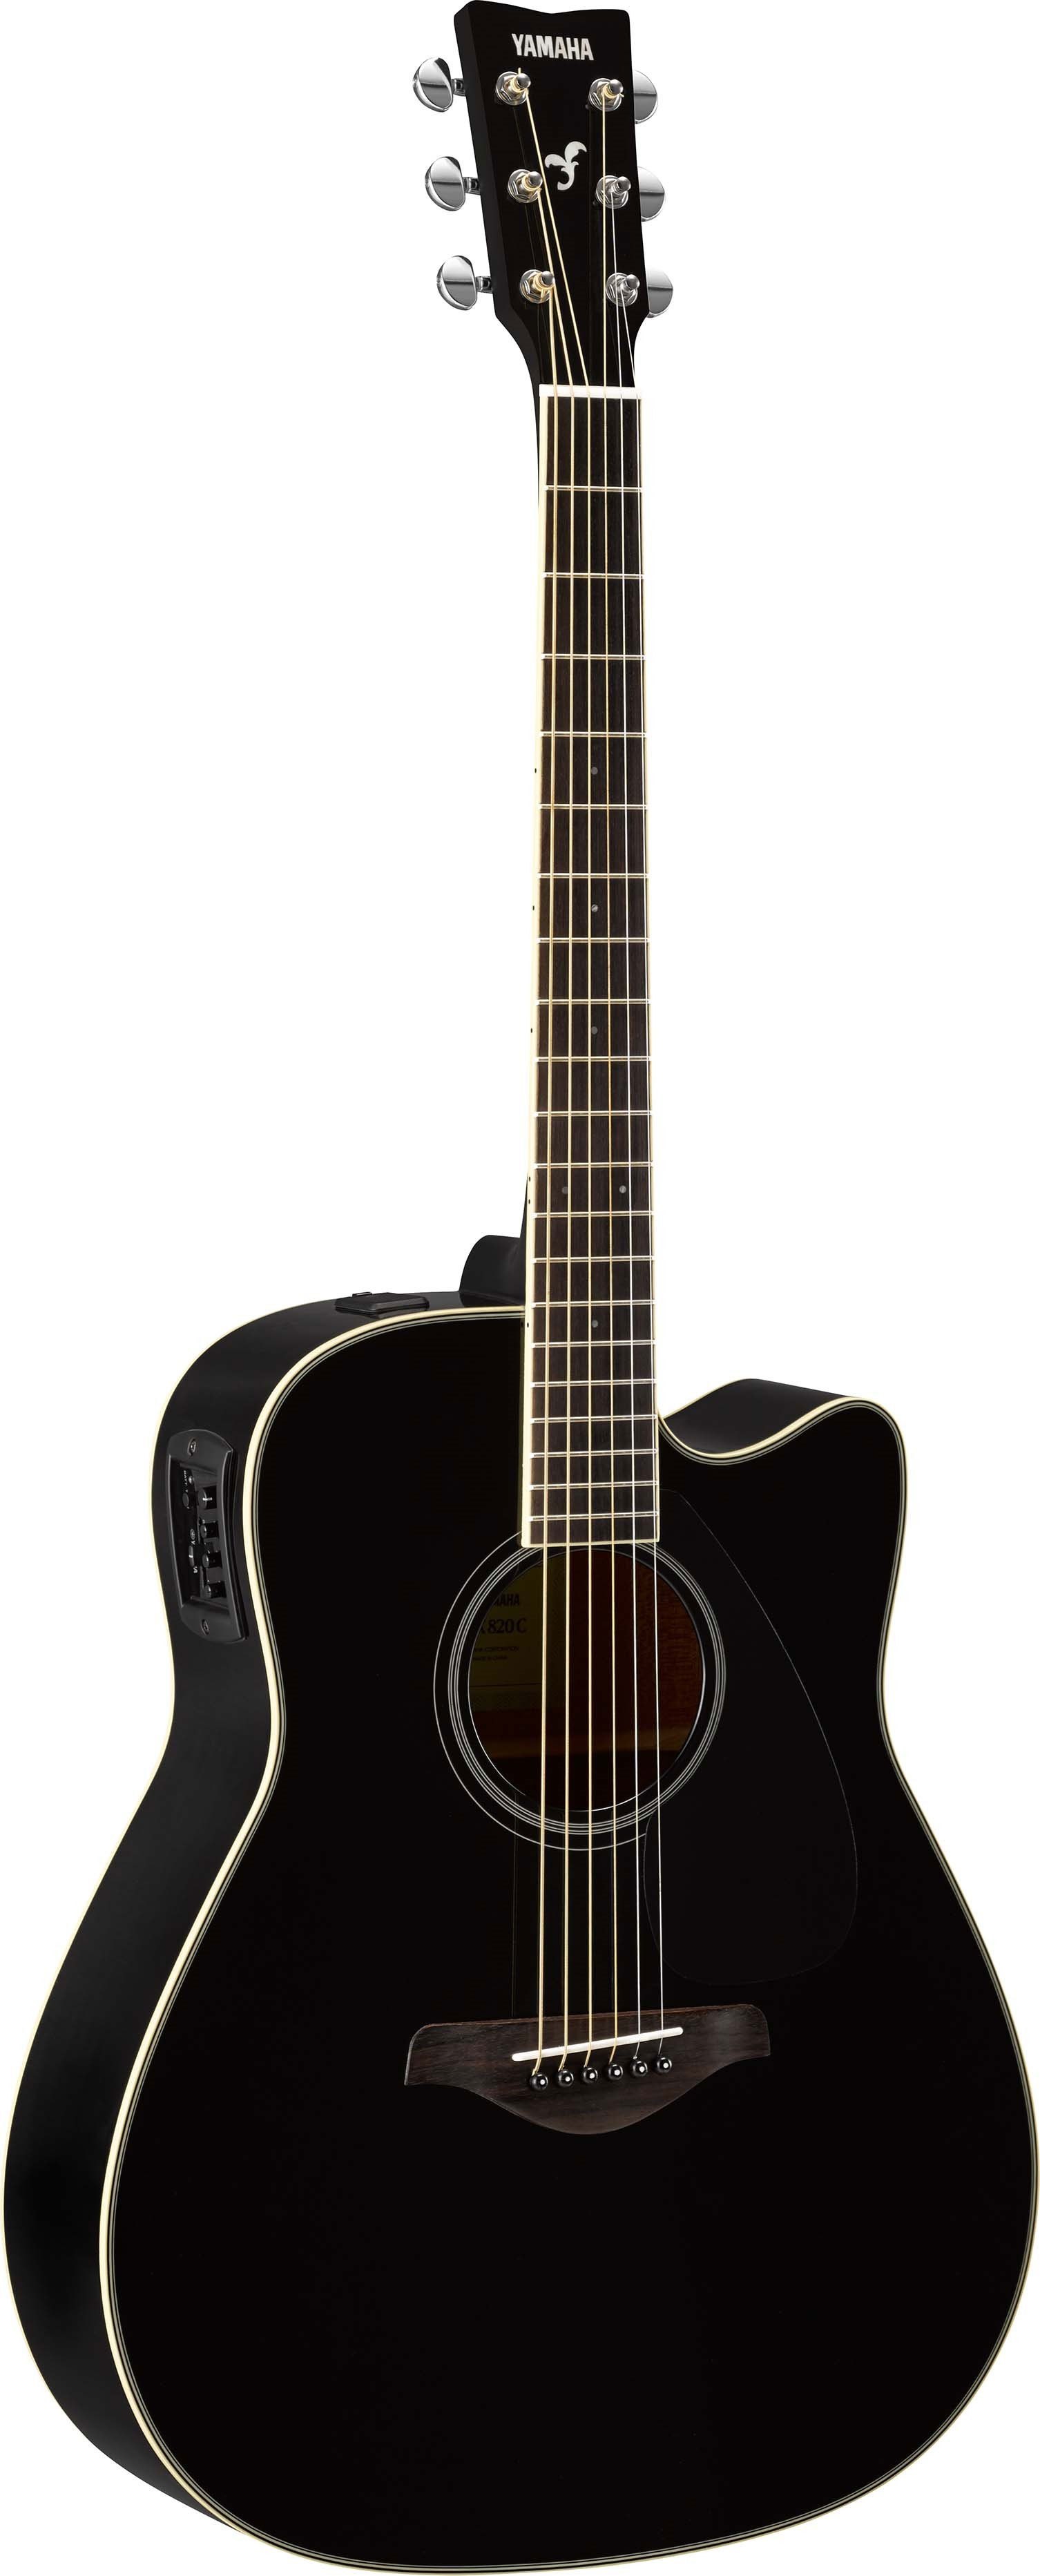 FG / FS800 - Overview - FG Series - Acoustic Guitars - Guitars 